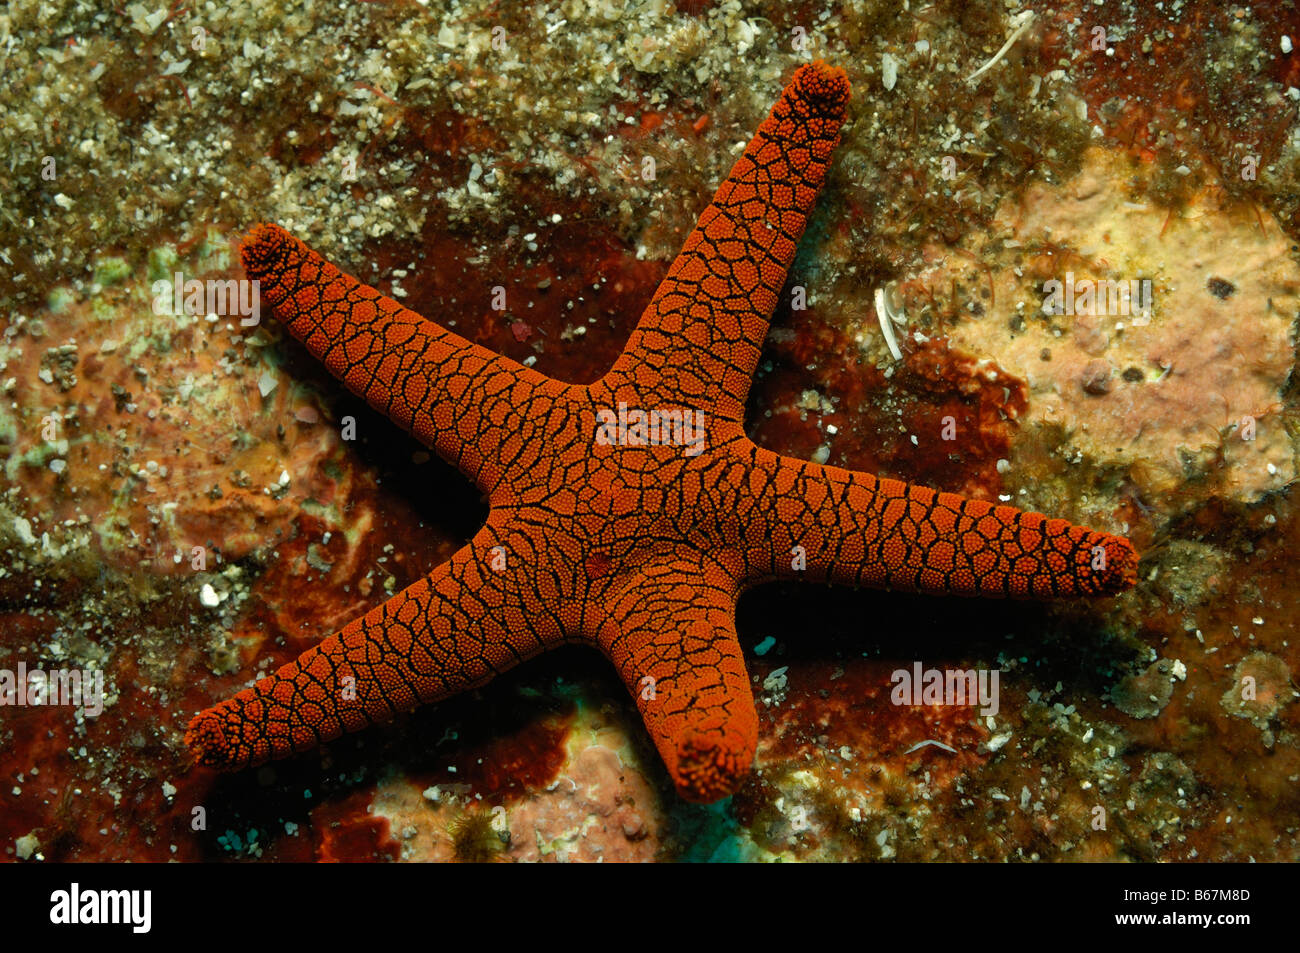 Red Sea Star Fromia spec Alor Lesser Sunda Islands Indonésie indo-pacifique Banque D'Images